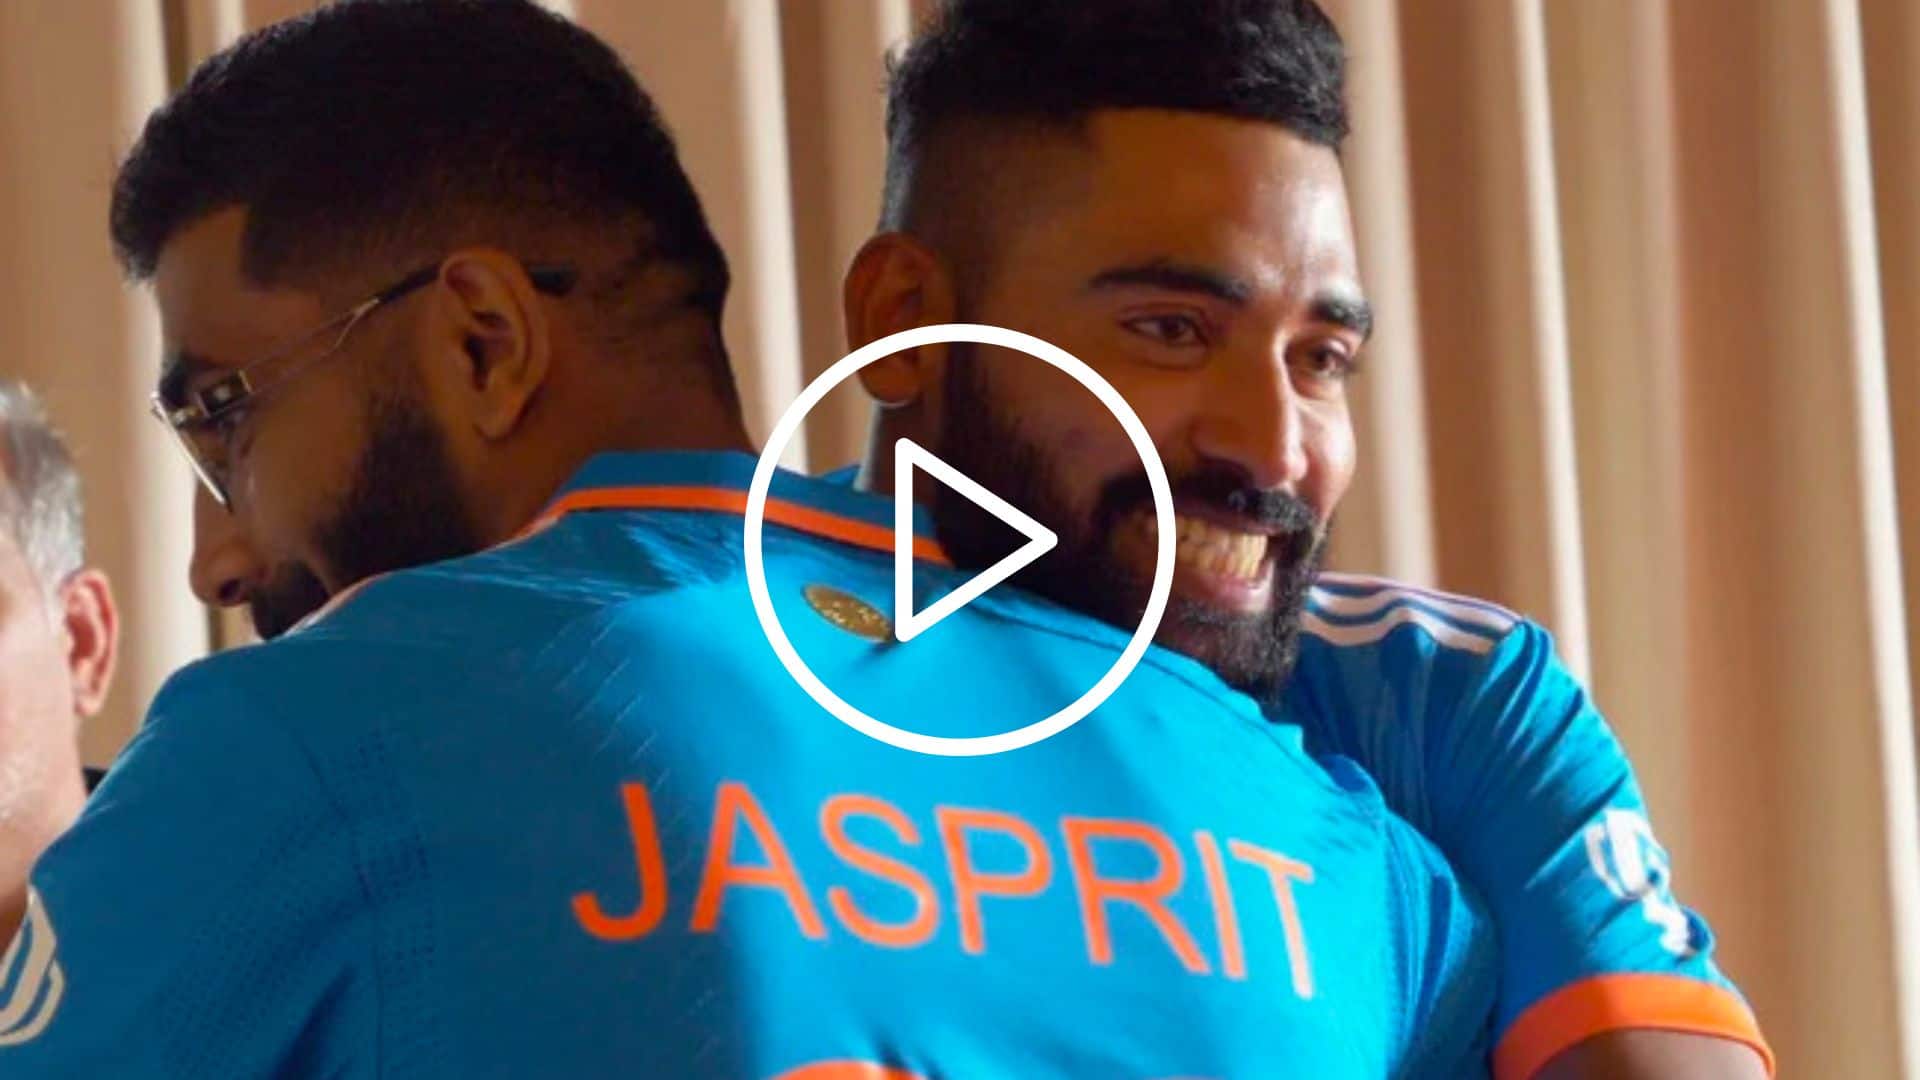 [Watch] Jasprit Bumrah, Siraj's Emotional Hug Wins Heart Before IND vs PAK